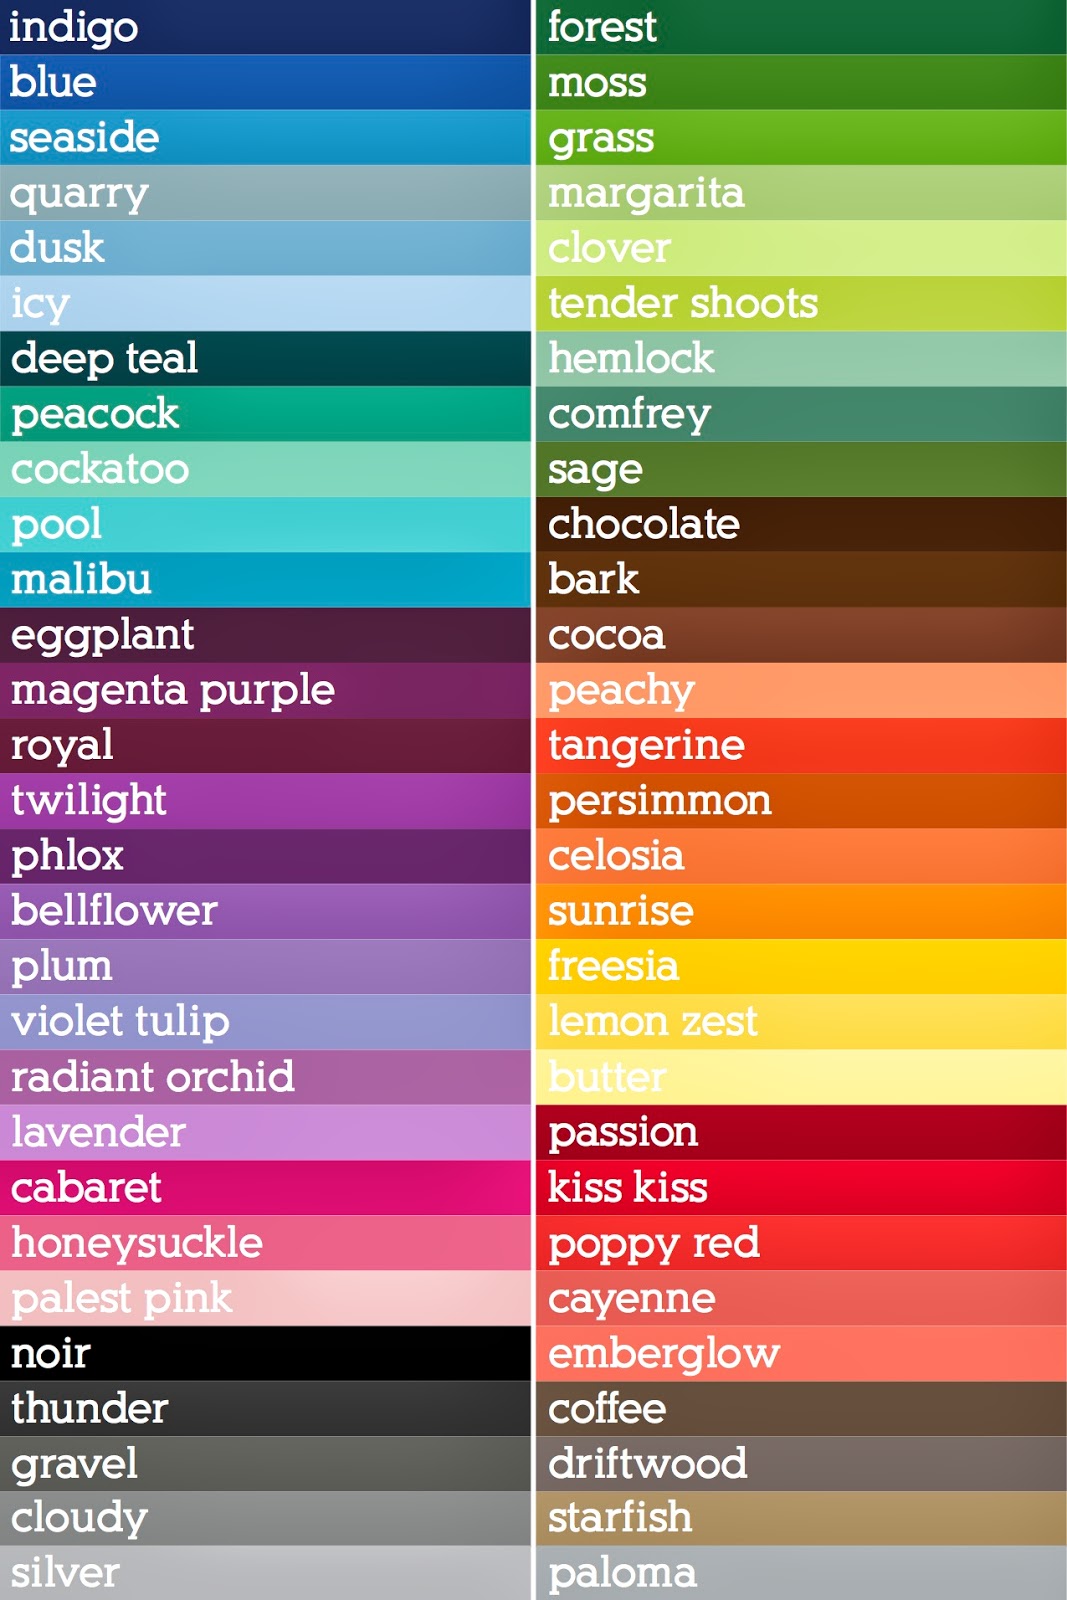 Colour Full Chart Paper